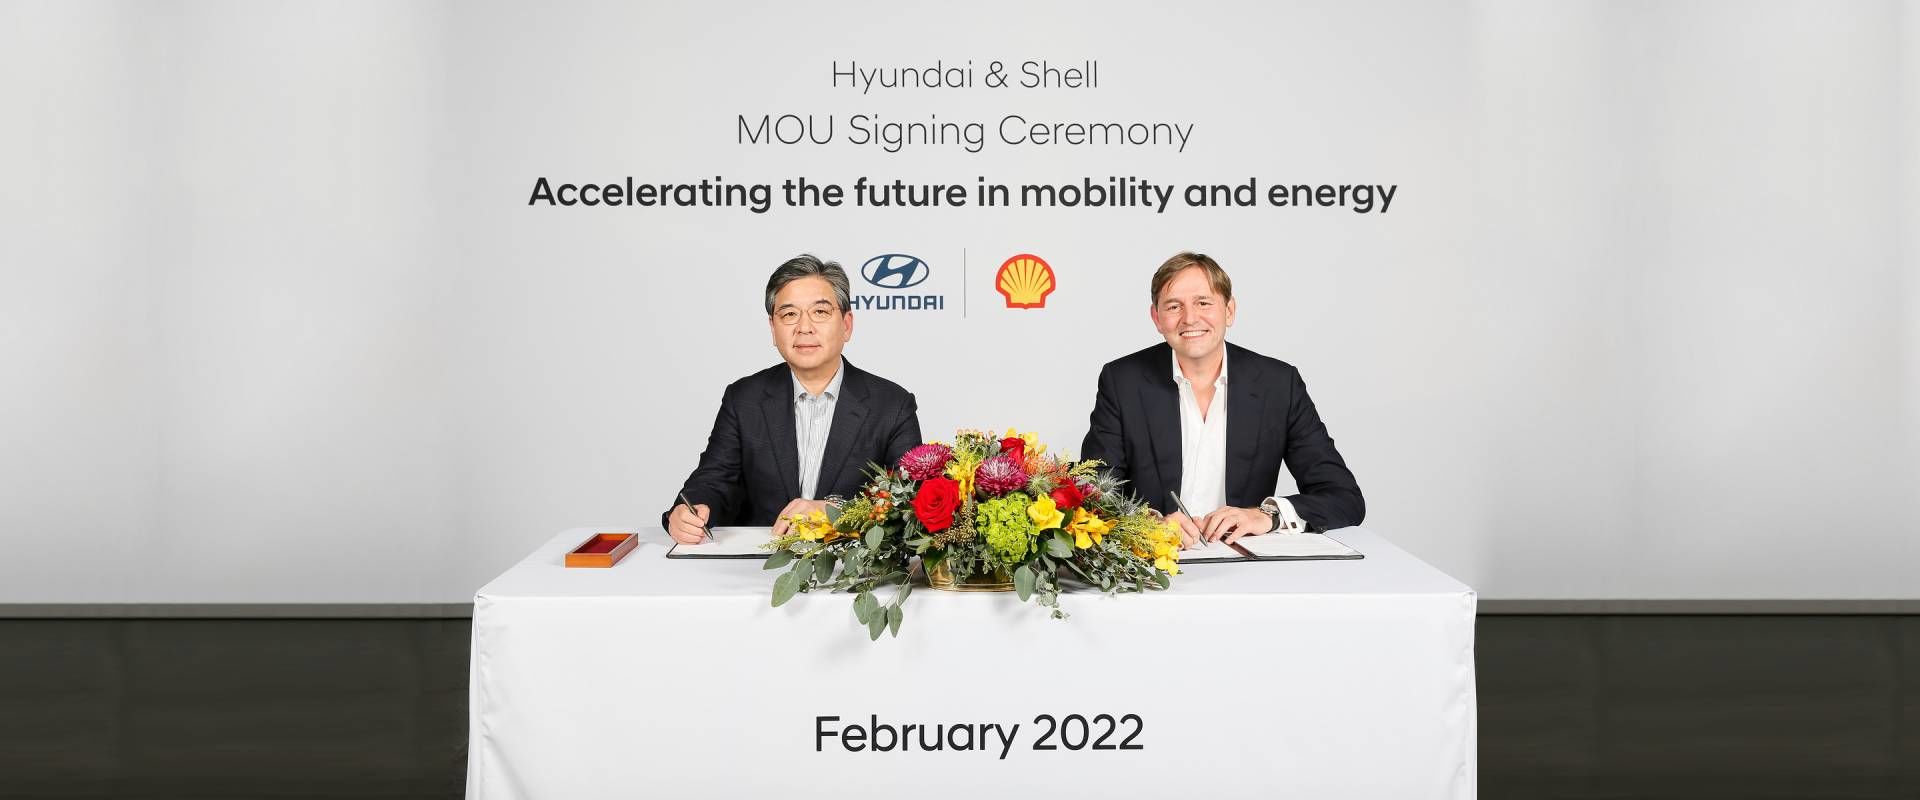 Jaehoon Chang, President and CEO of Hyundai Motor Company  (right) Huibert Vigeveno, Downstream Director of Shell